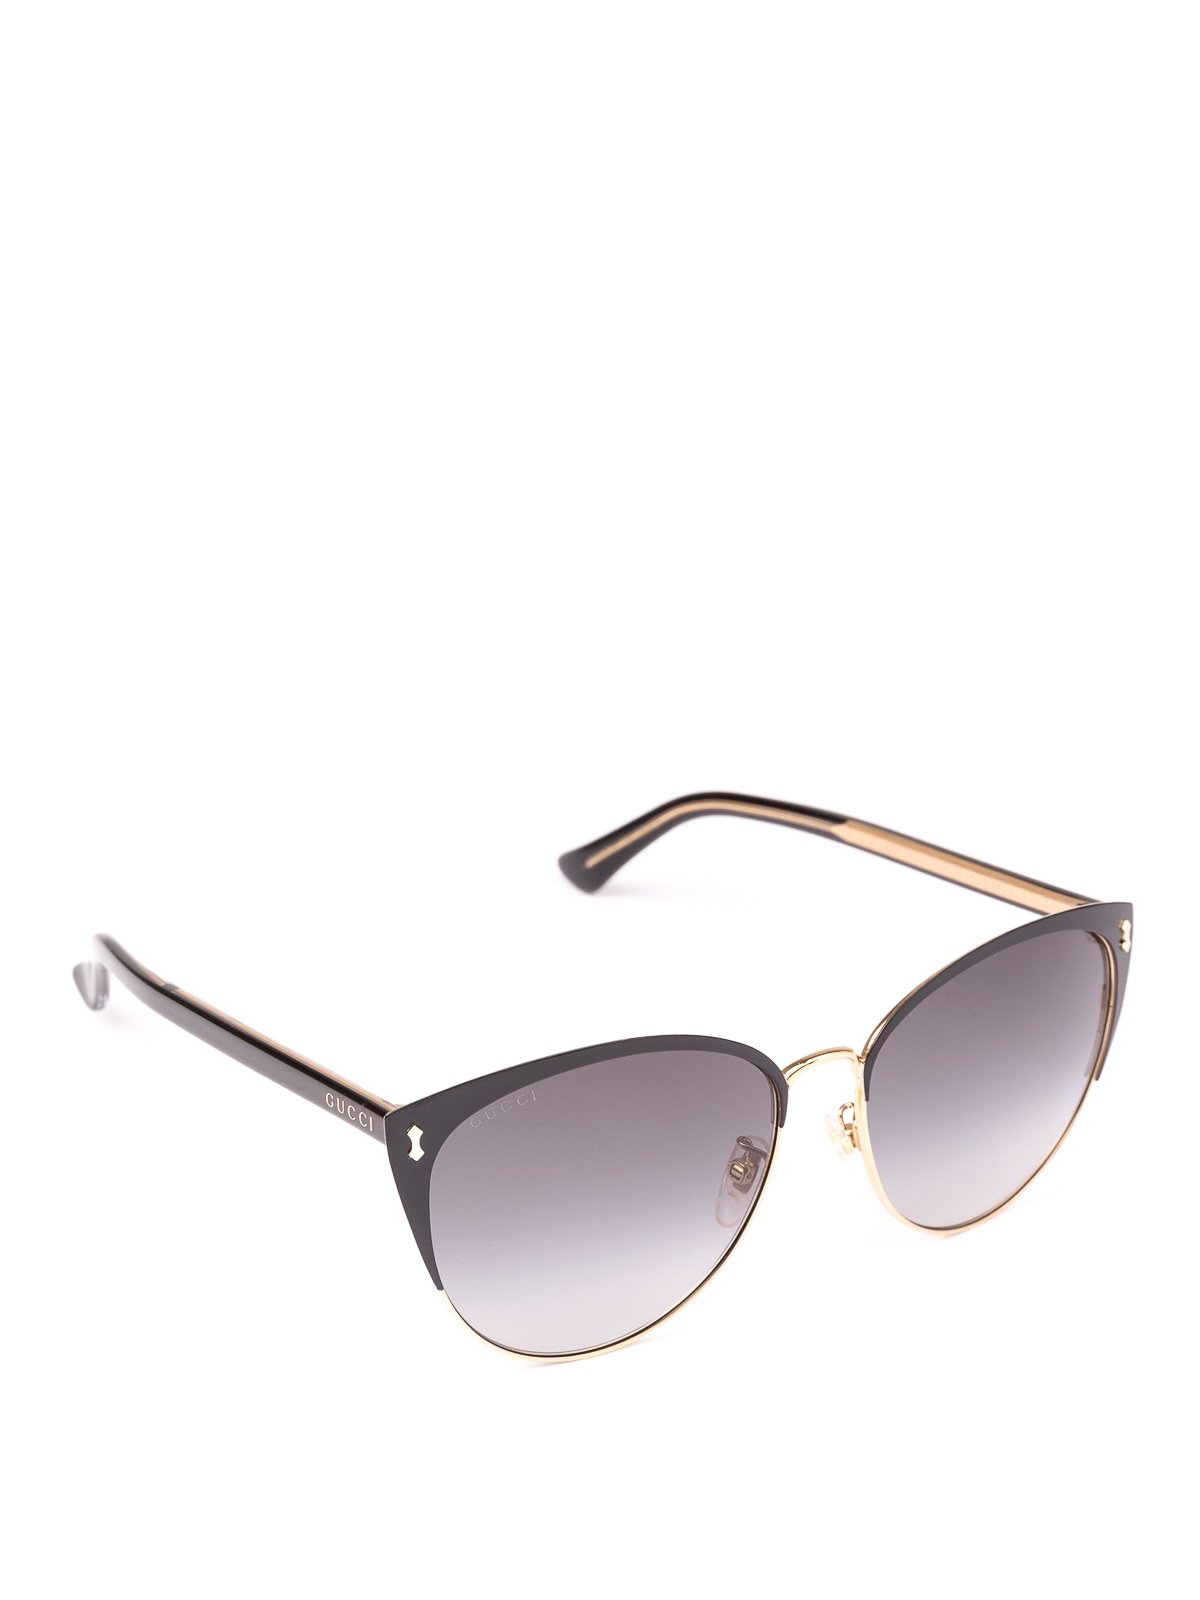 Black and gold metal frame cat eye sunglasses